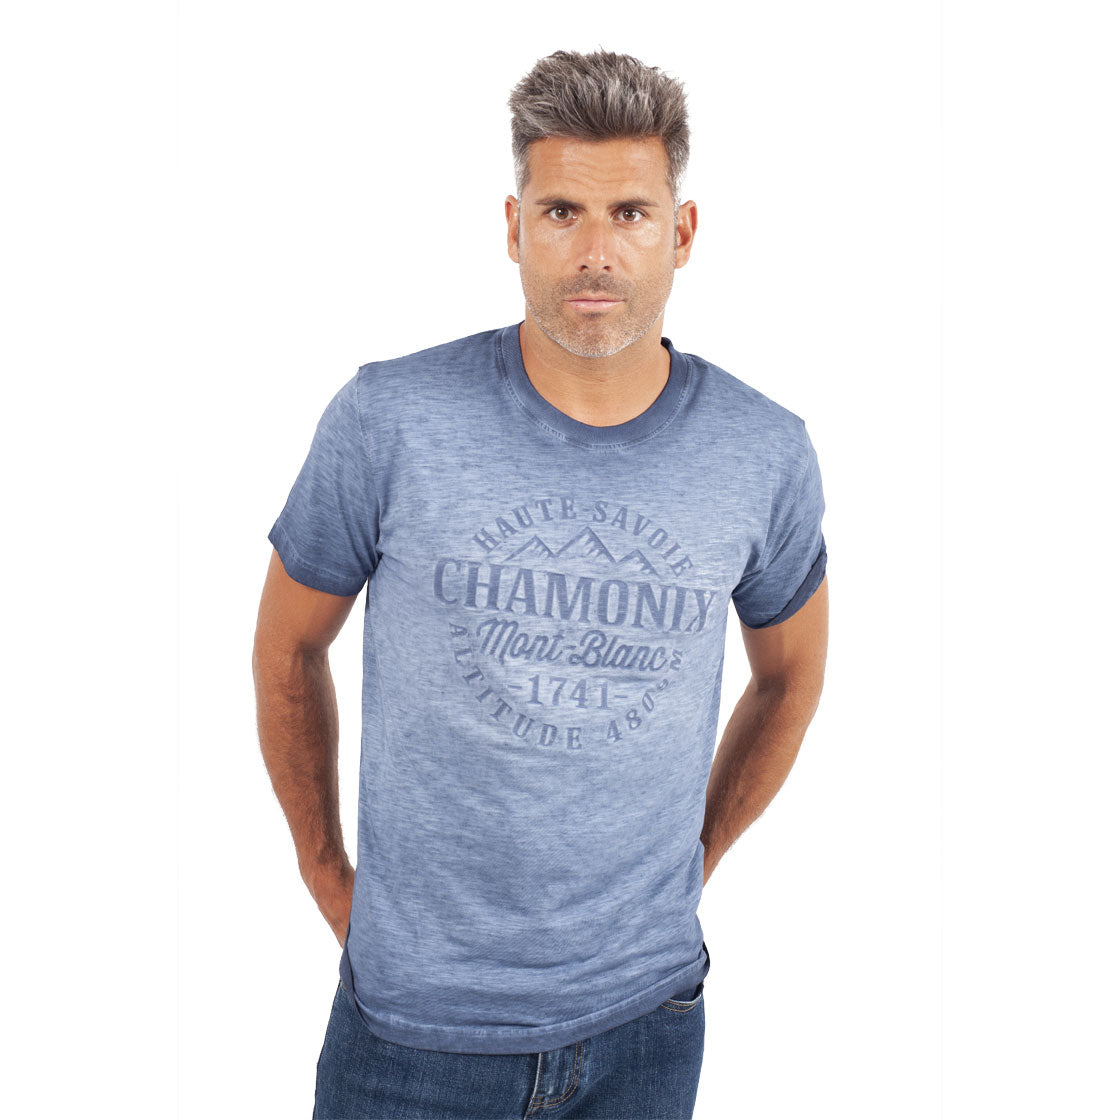 T-shirt gaufré Chamonix Mont-Blanc - Bleu